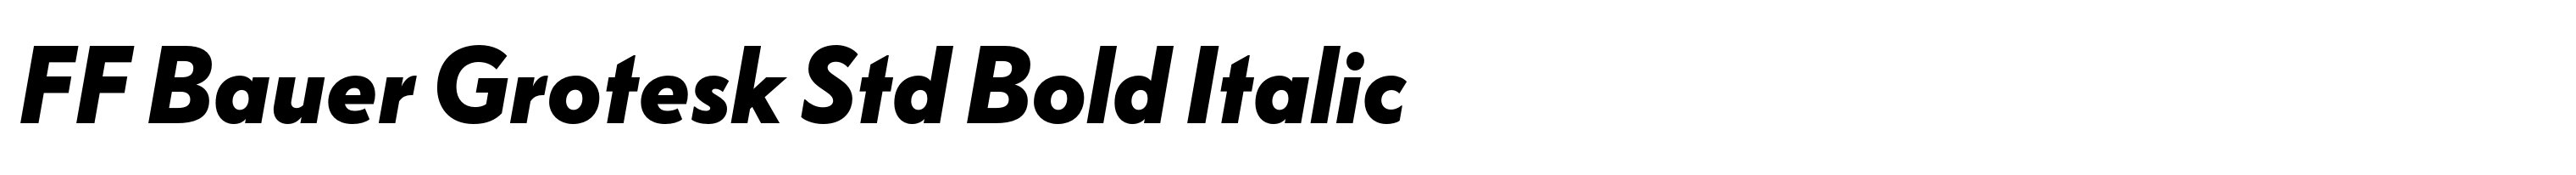 FF Bauer Grotesk Std Bold Italic